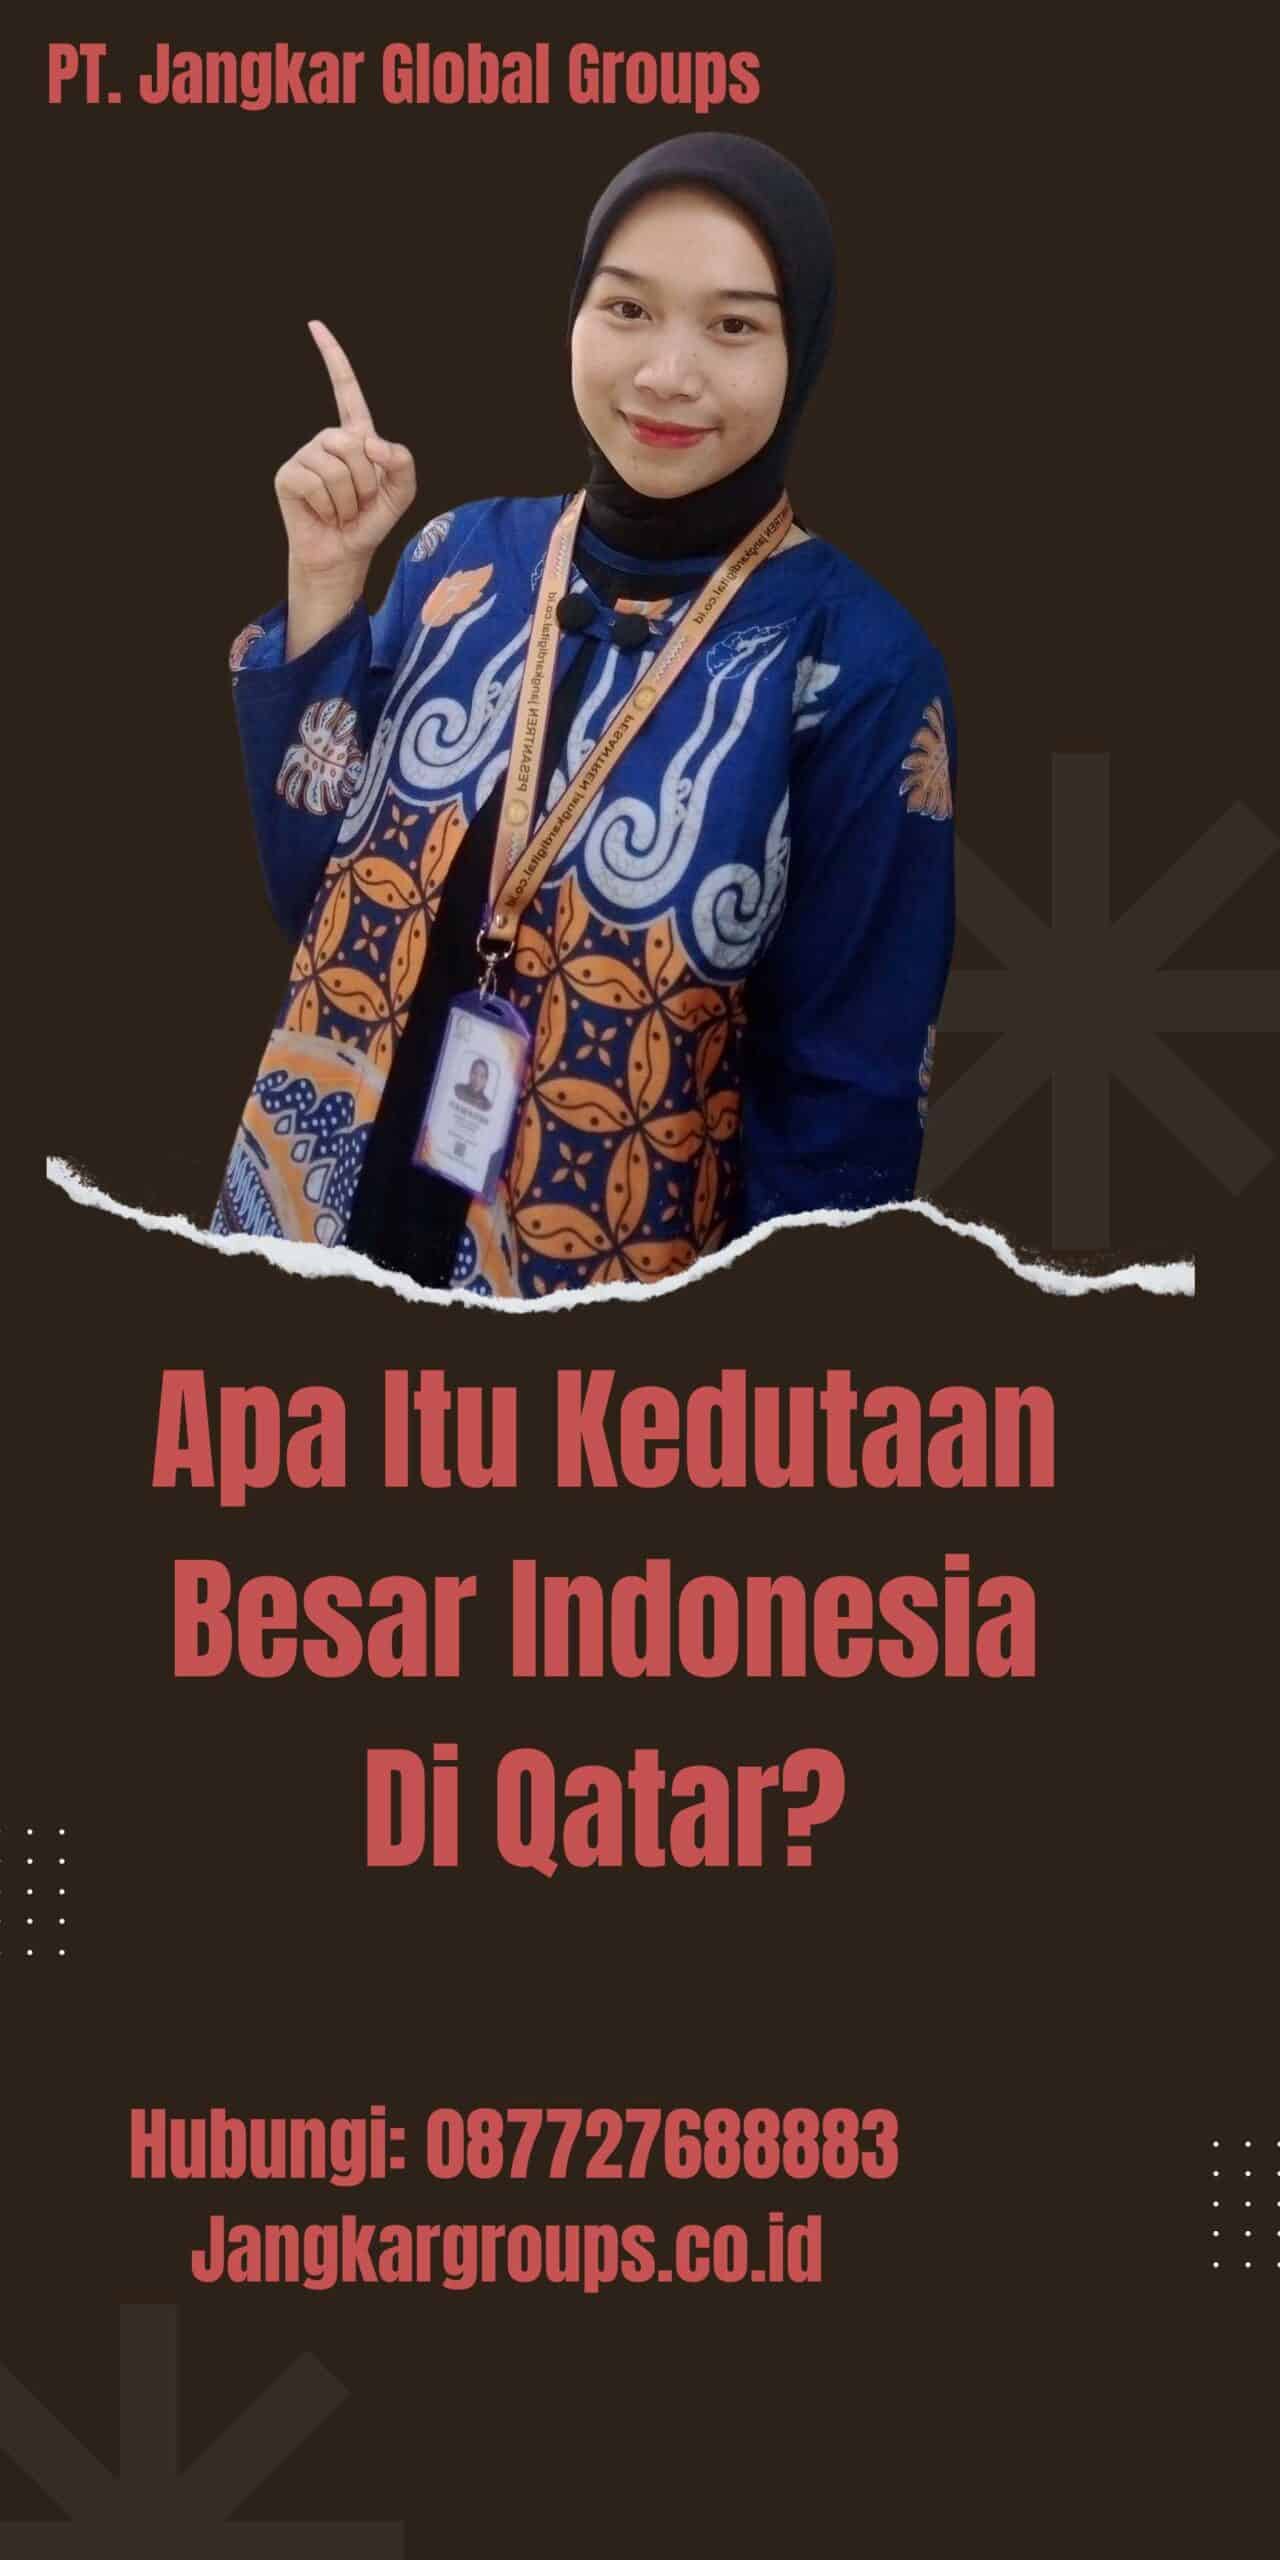 Apa Itu Kedutaan Besar Indonesia Di Qatar?